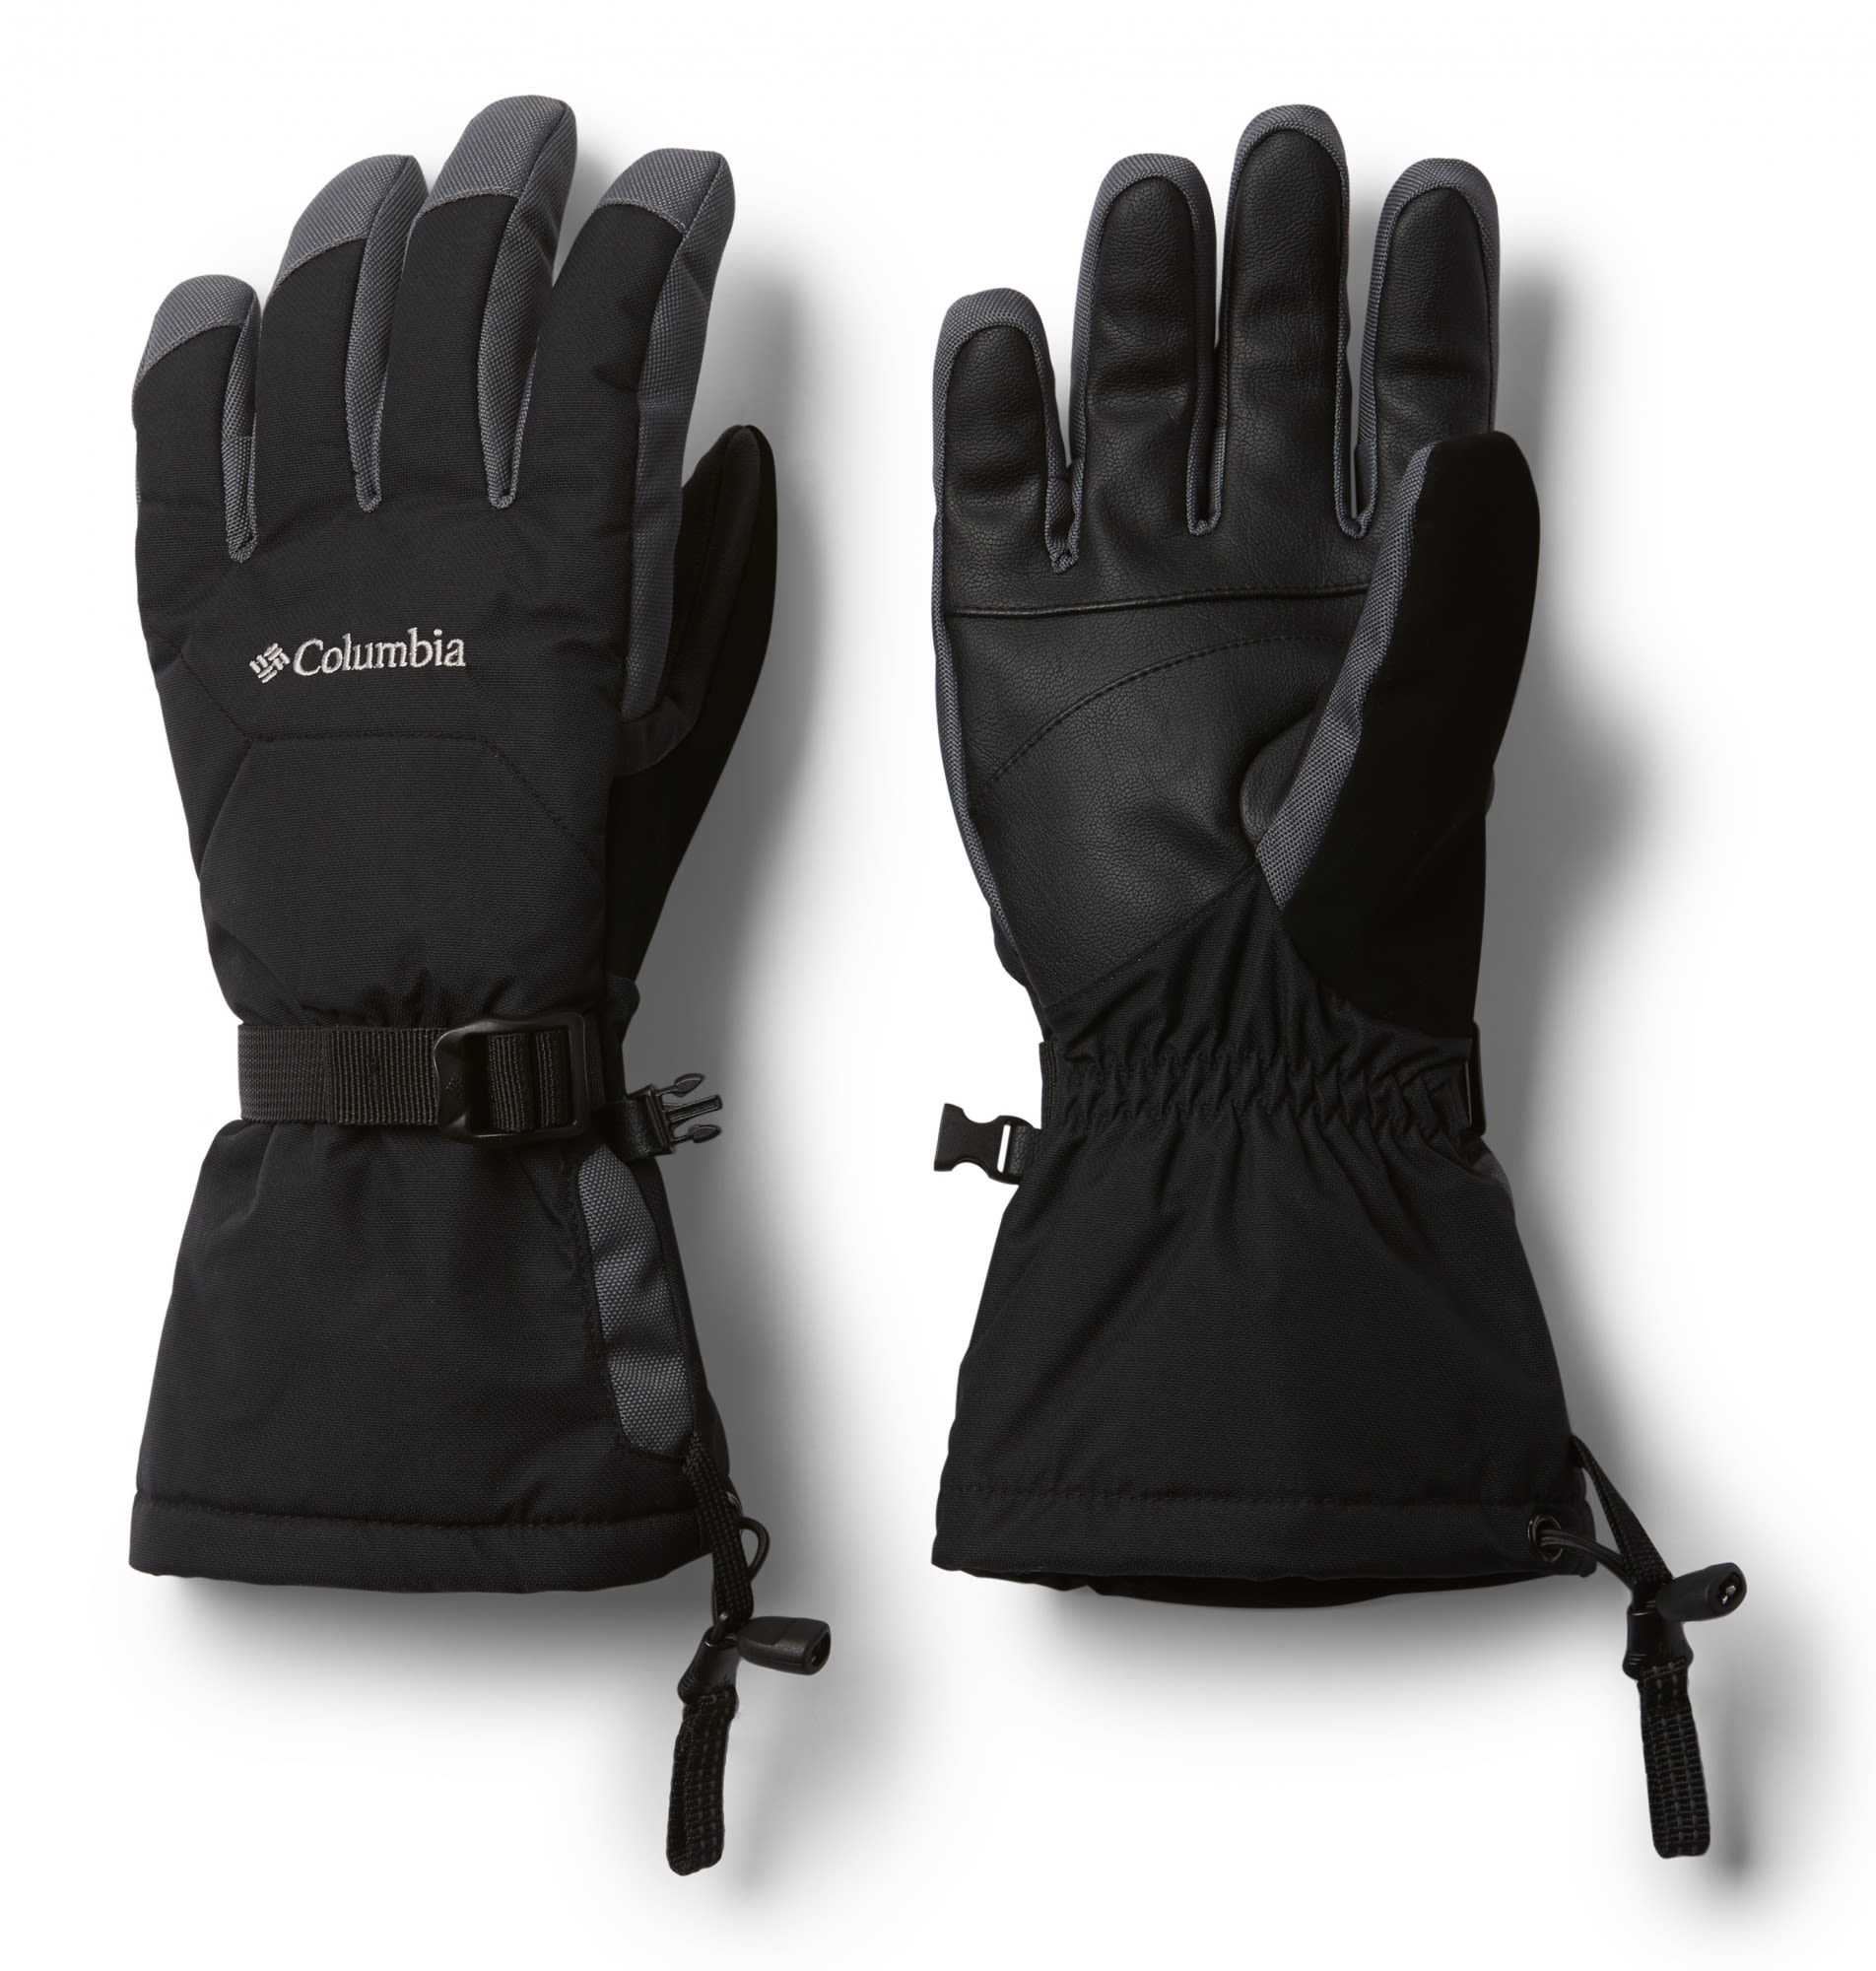 Columbia Whirlibird Glove Schwarz- Male Fingerhandschuhe- Grsse S - Farbe Black unter Columbia